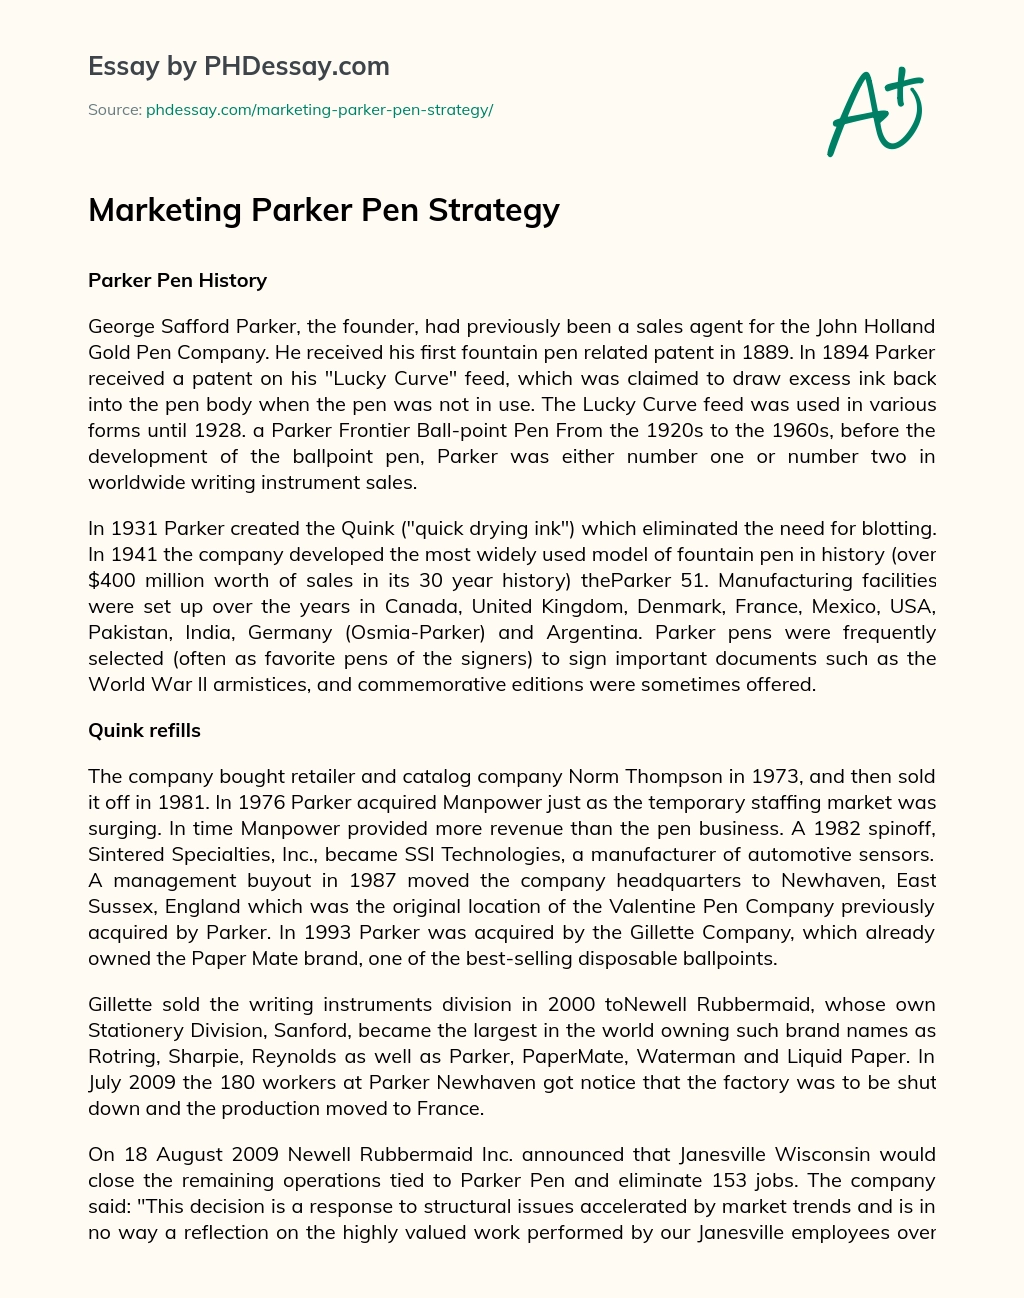 Marketing Parker Pen Strategy essay